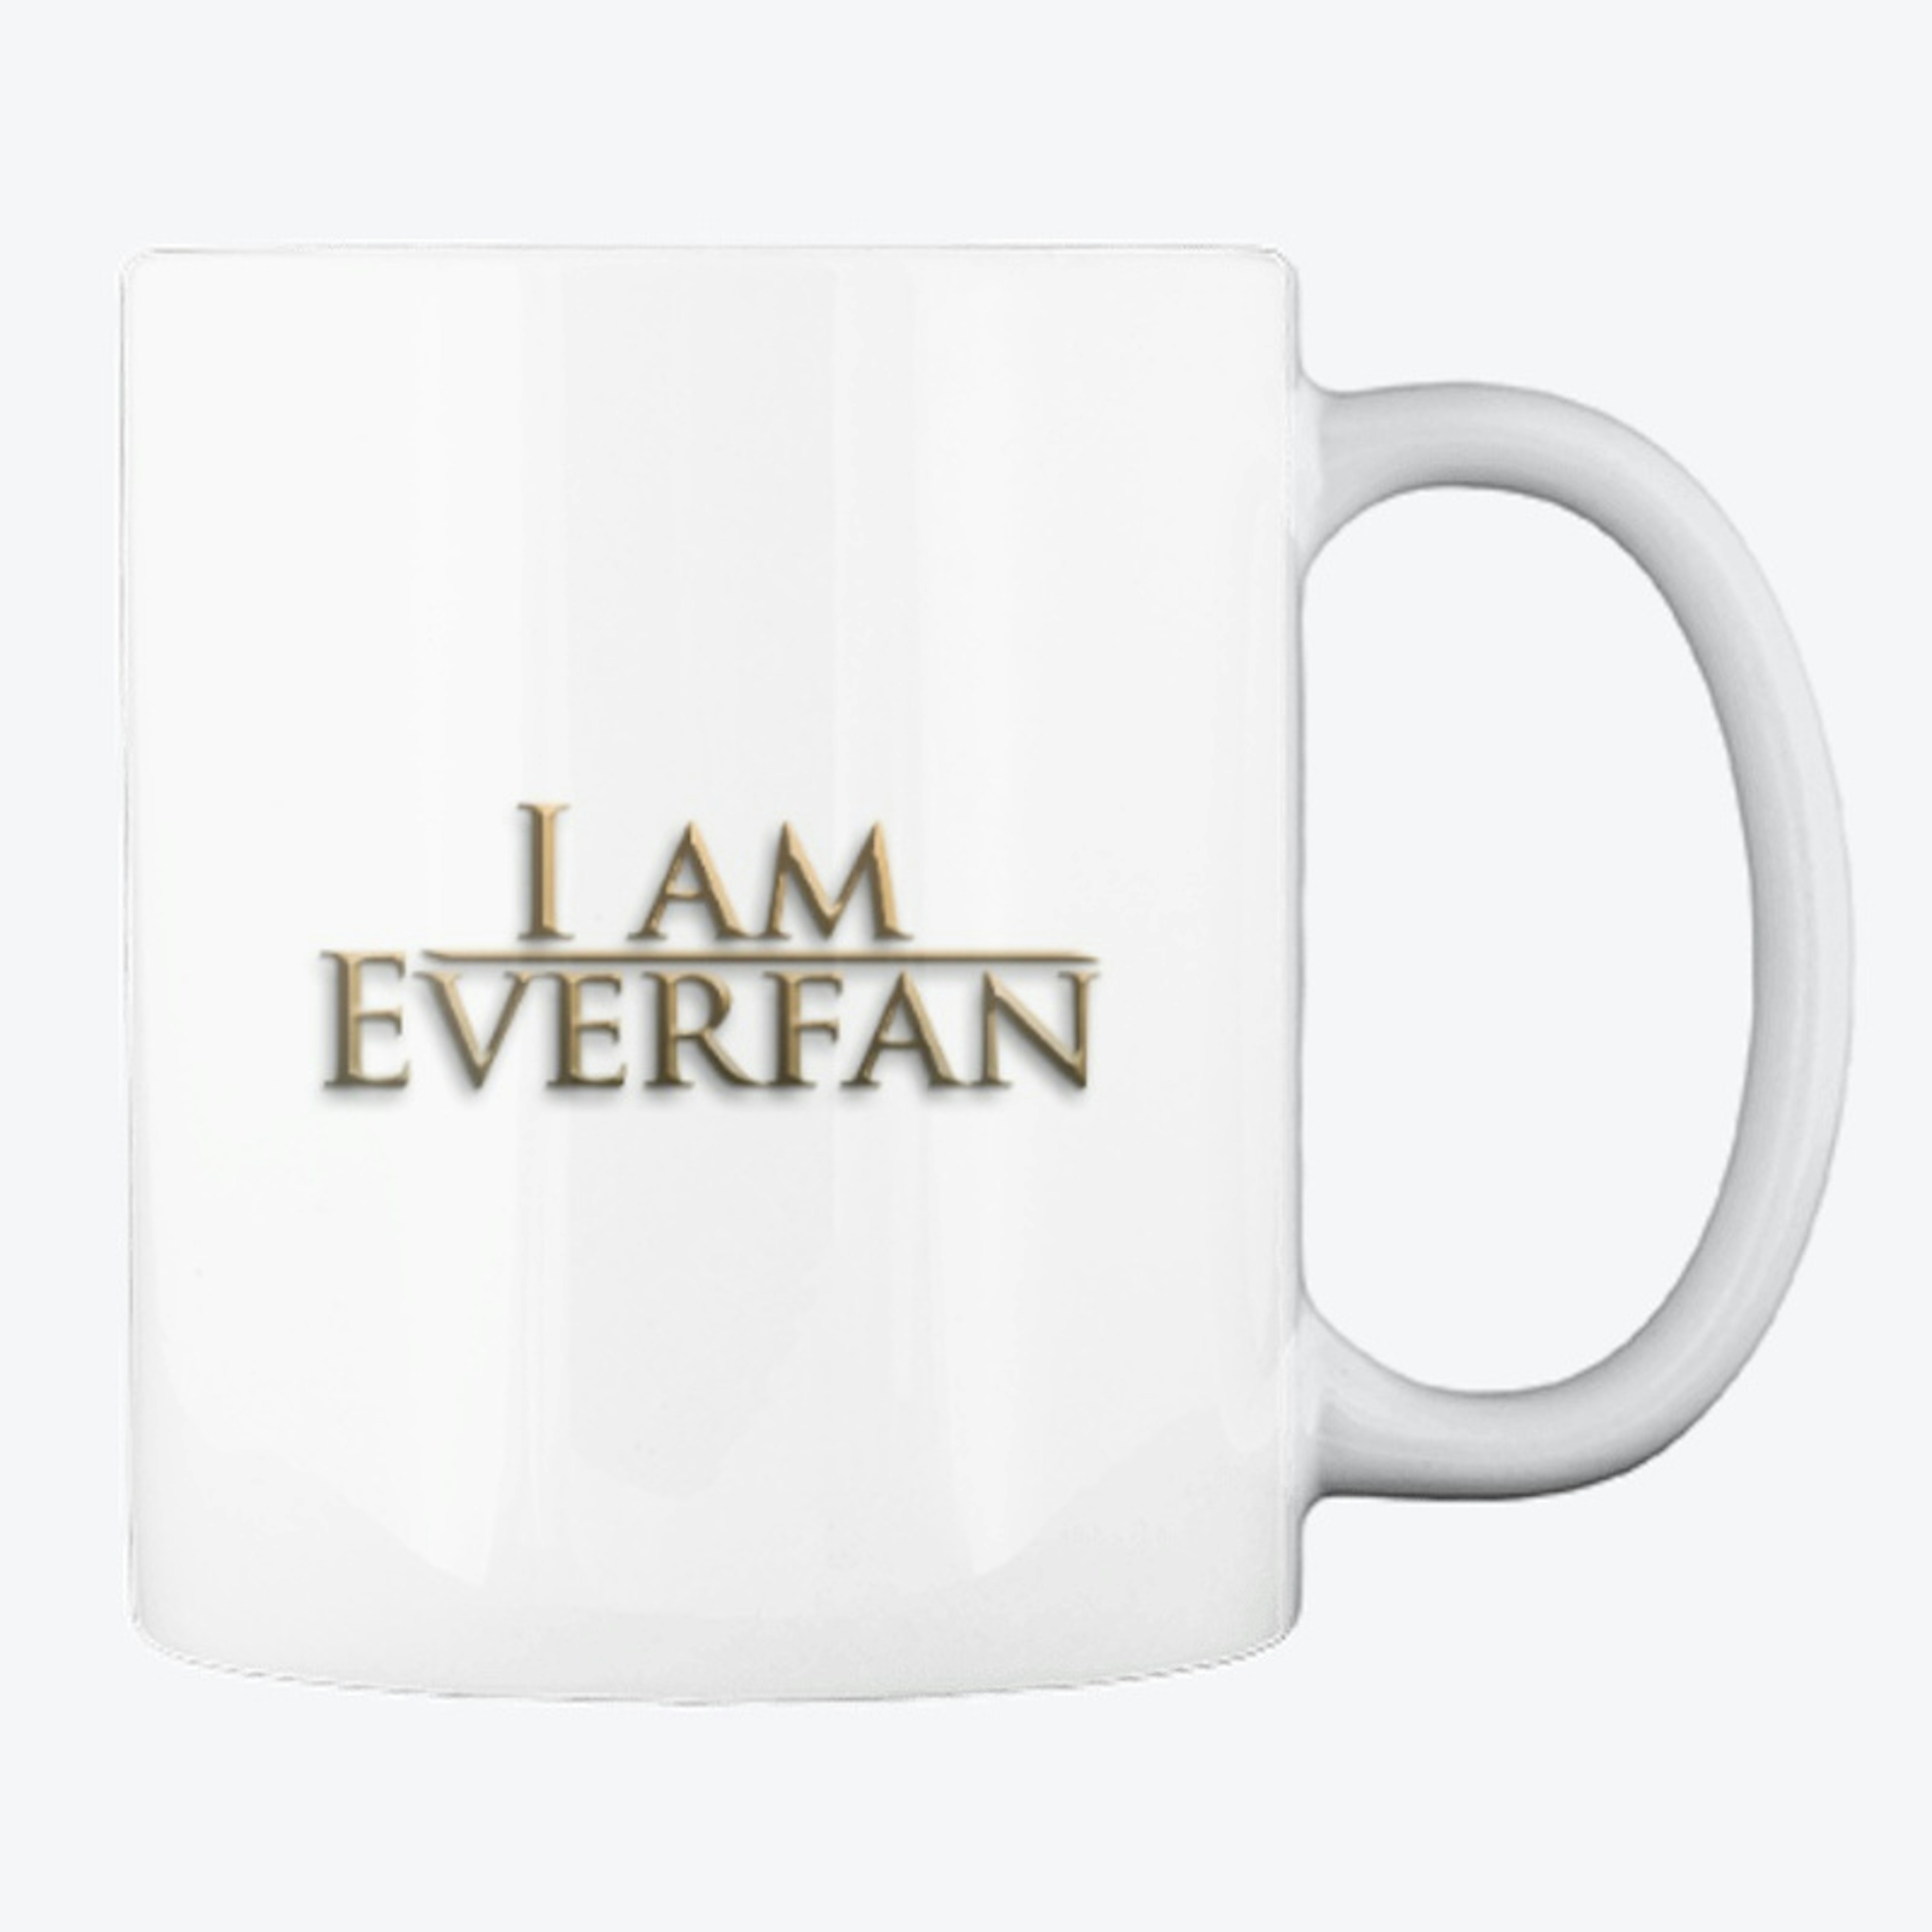 The Everfan Mug